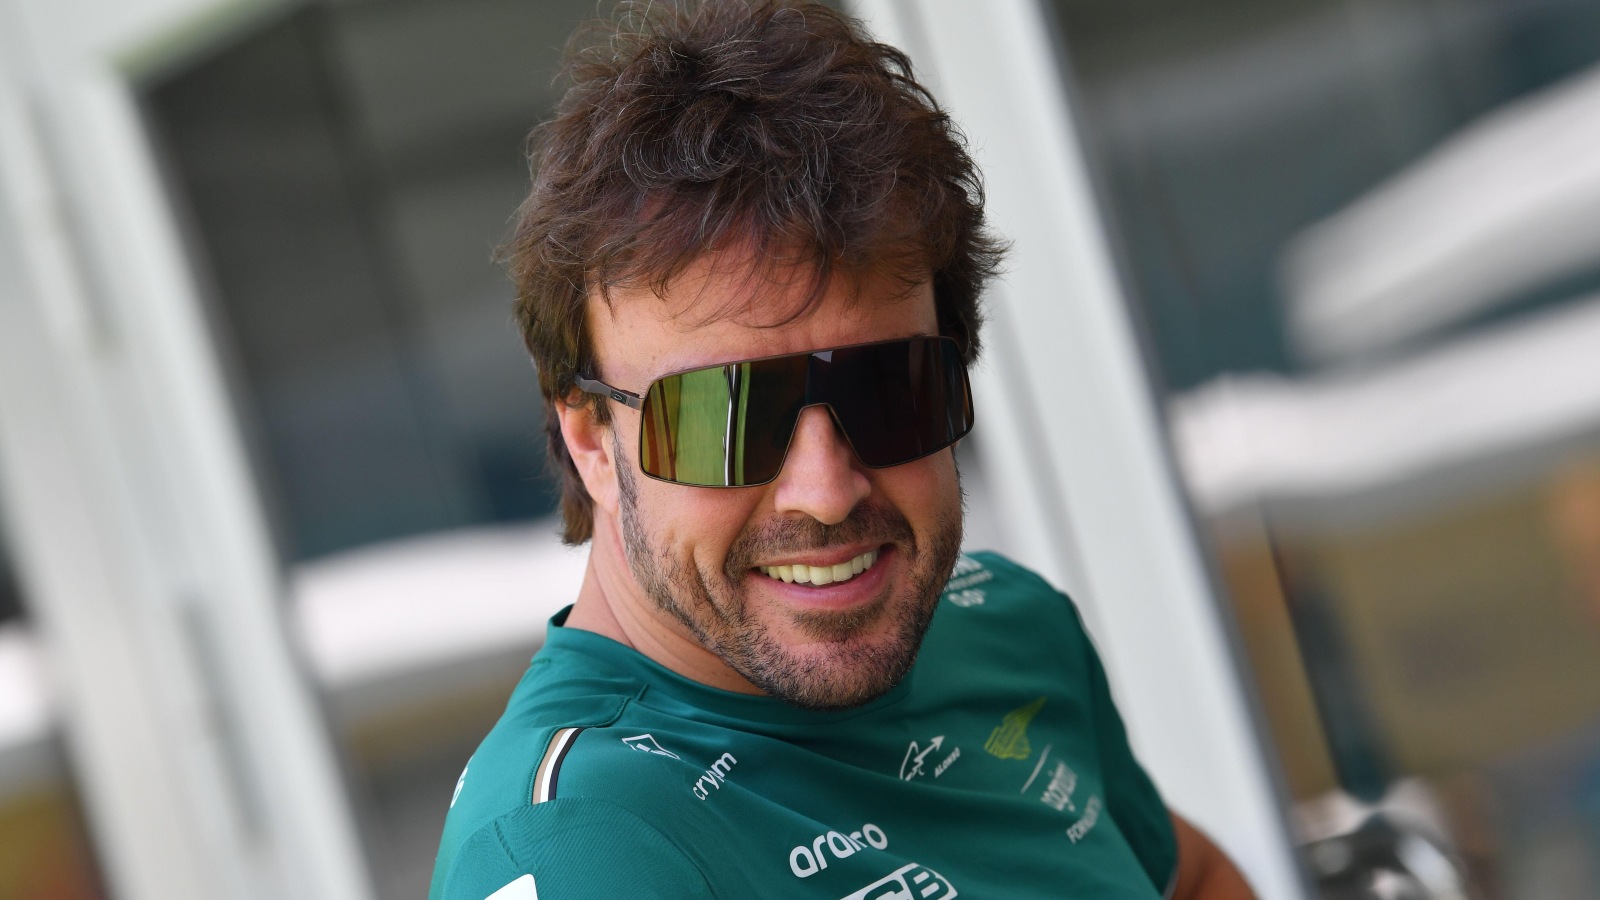 Fernando Alonso smiling wearing sunglasses. Miami, May 2023.